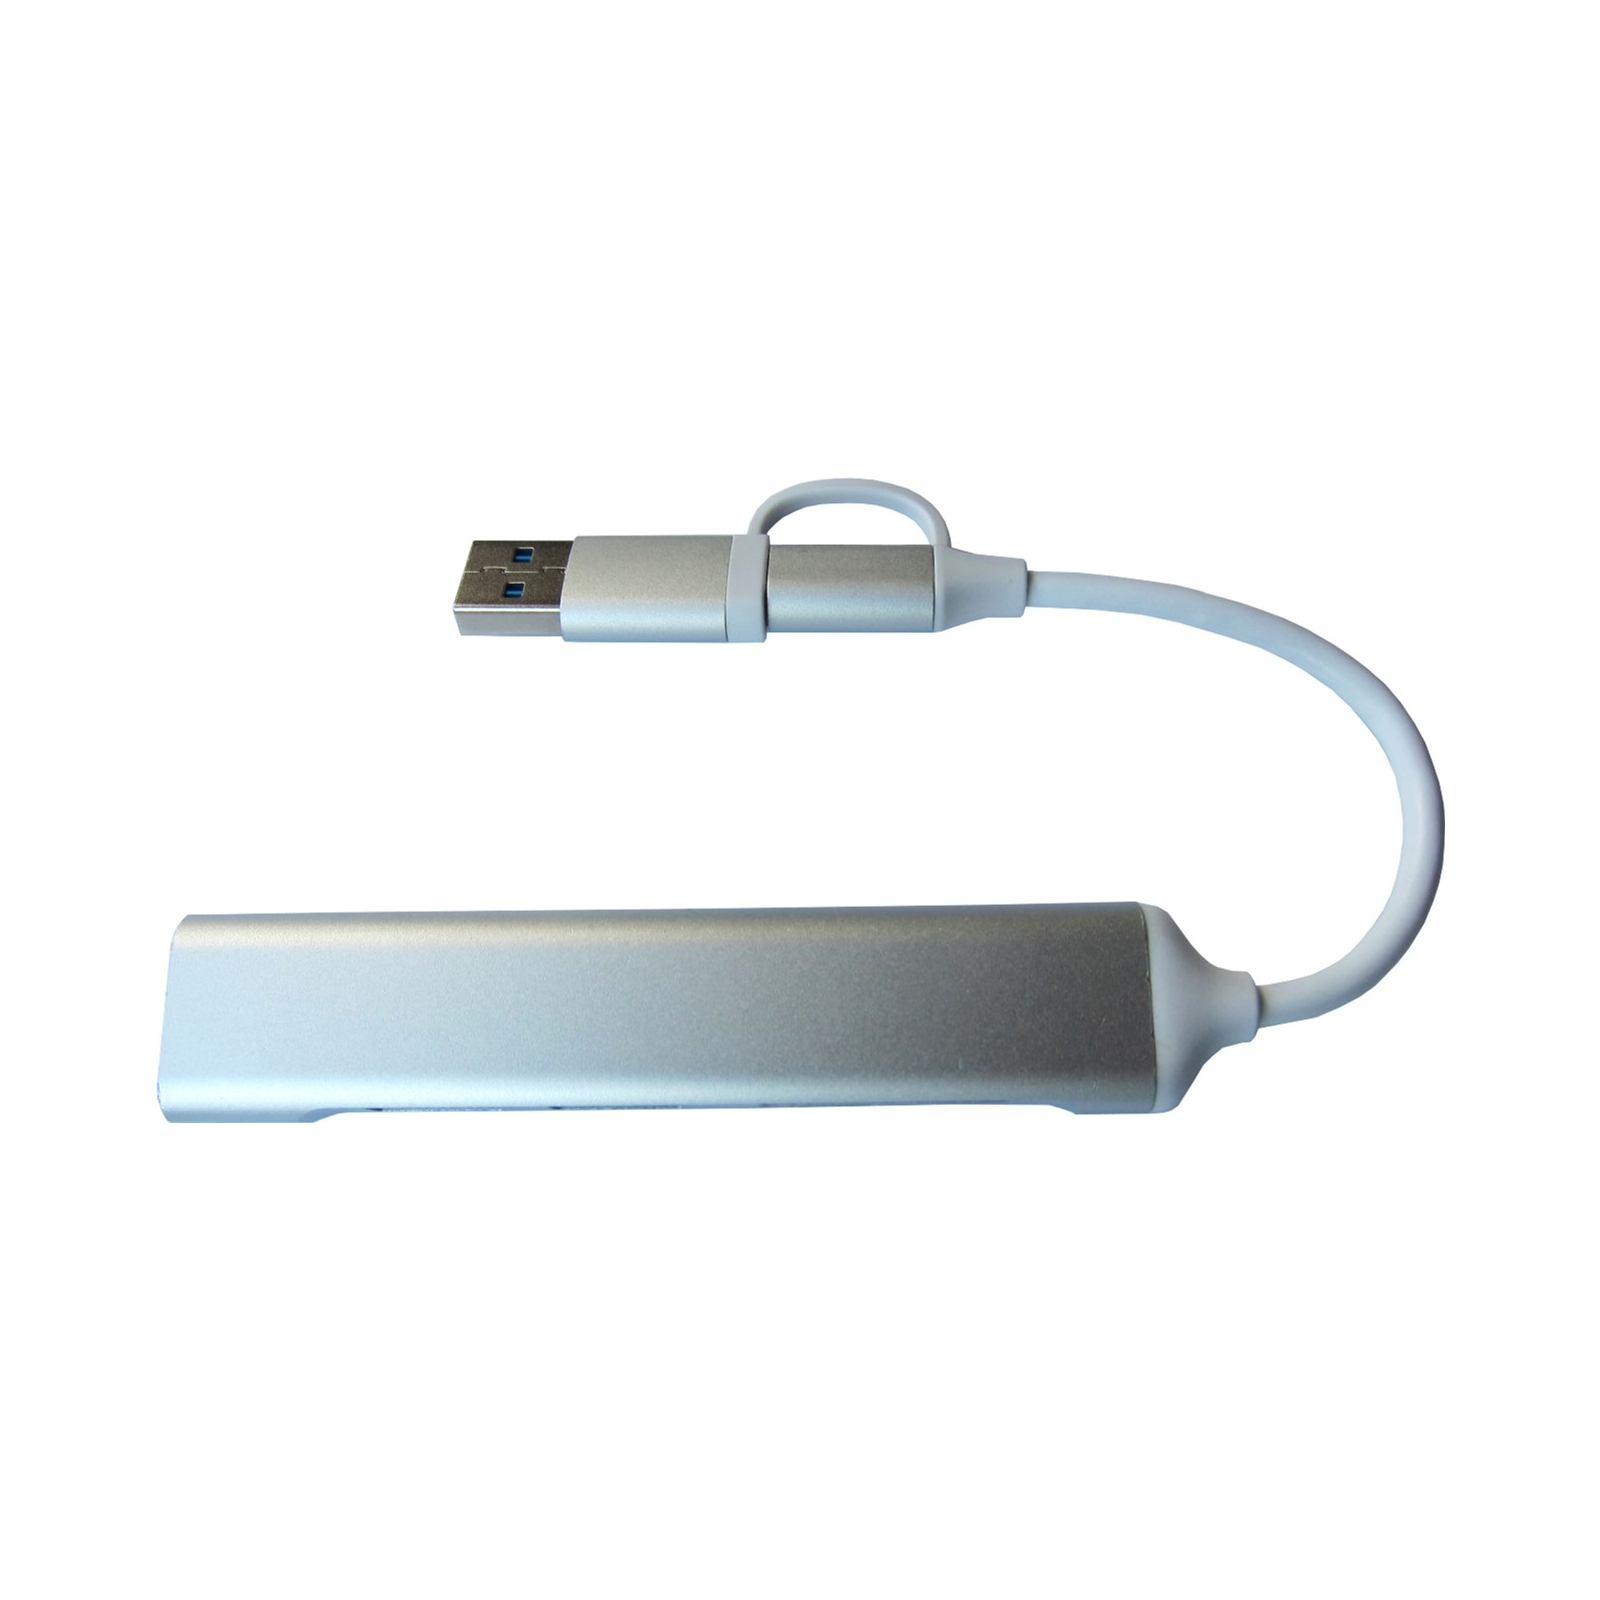 Концентратор Dynamode 5-in-1 USB Type-C/Type-A to 1хUSB3.0, 2xUSB 2.0, card-reader SD/MicroSD (DM-UH-518) зображення 2